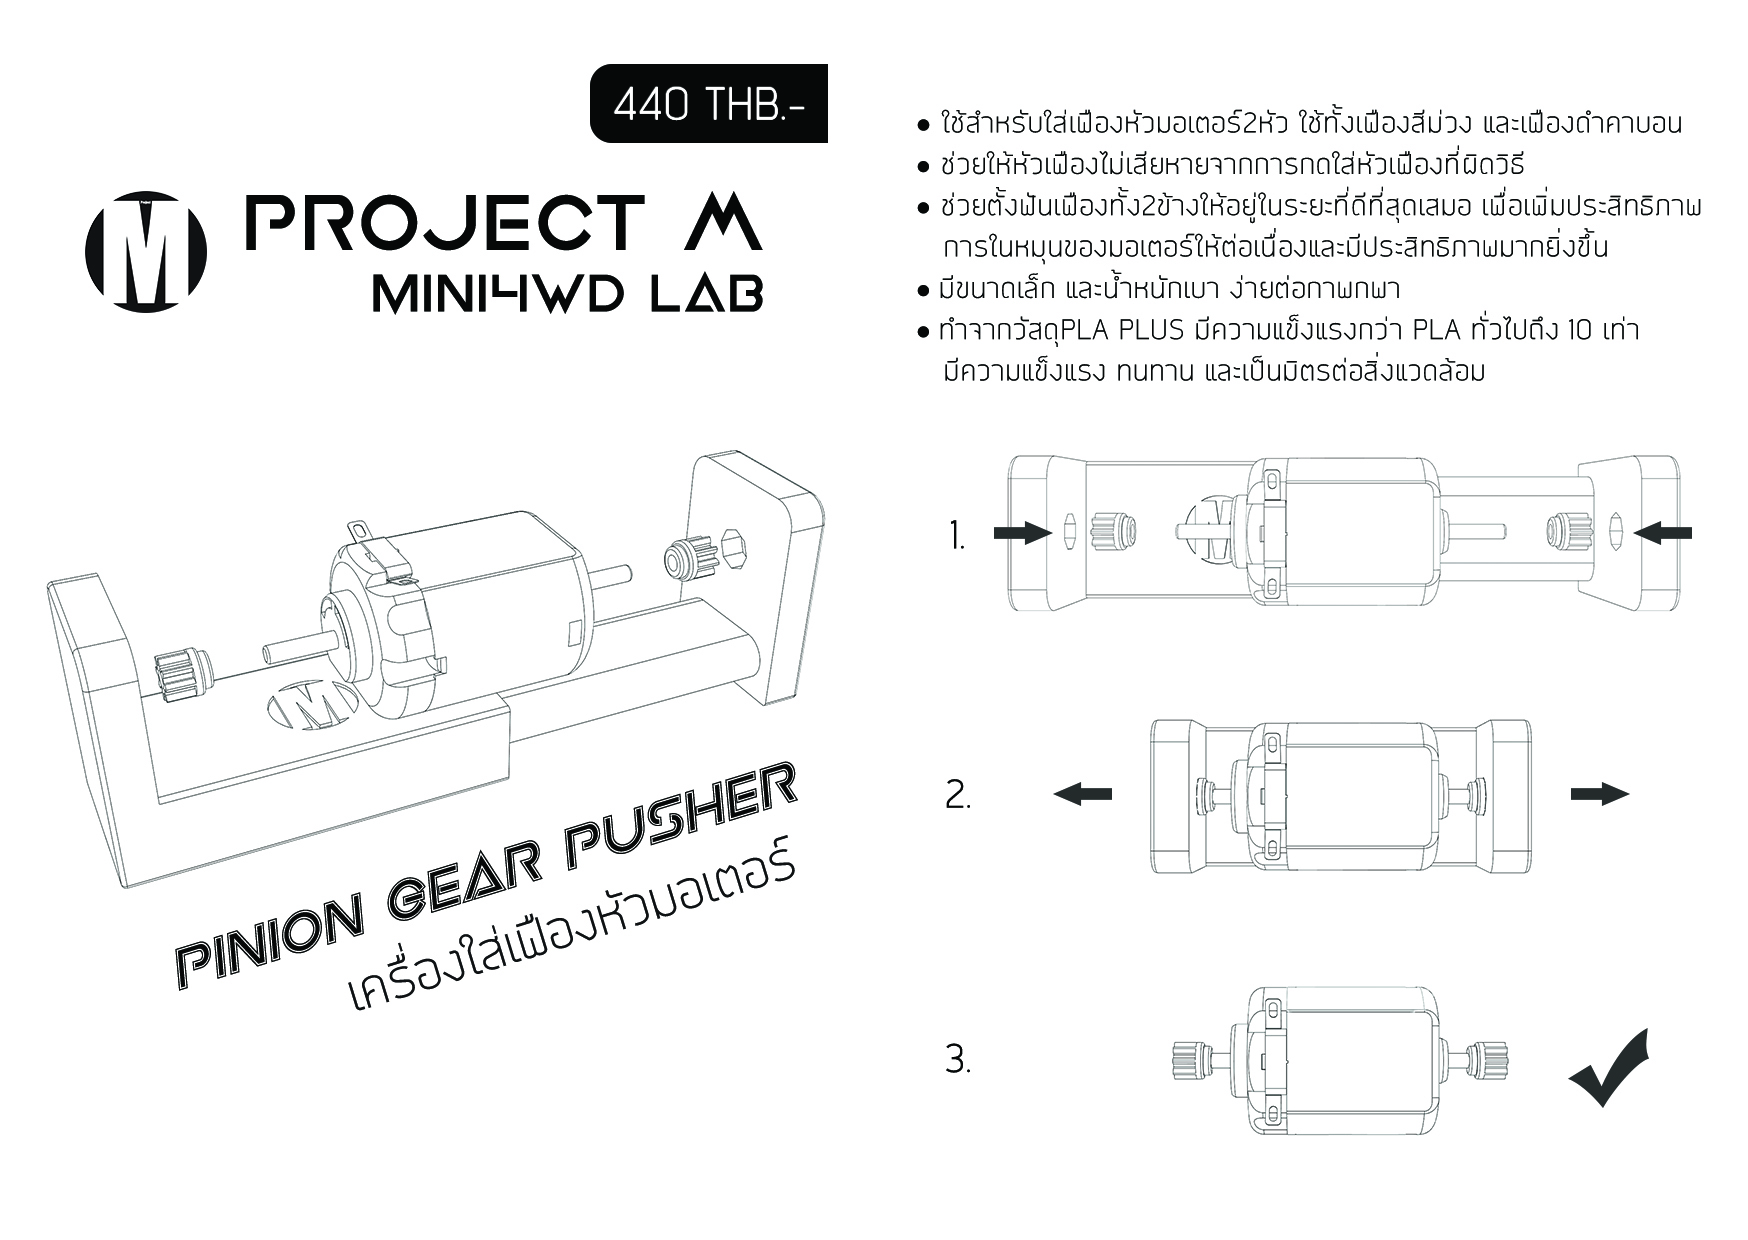 Pinion Gear Pusher